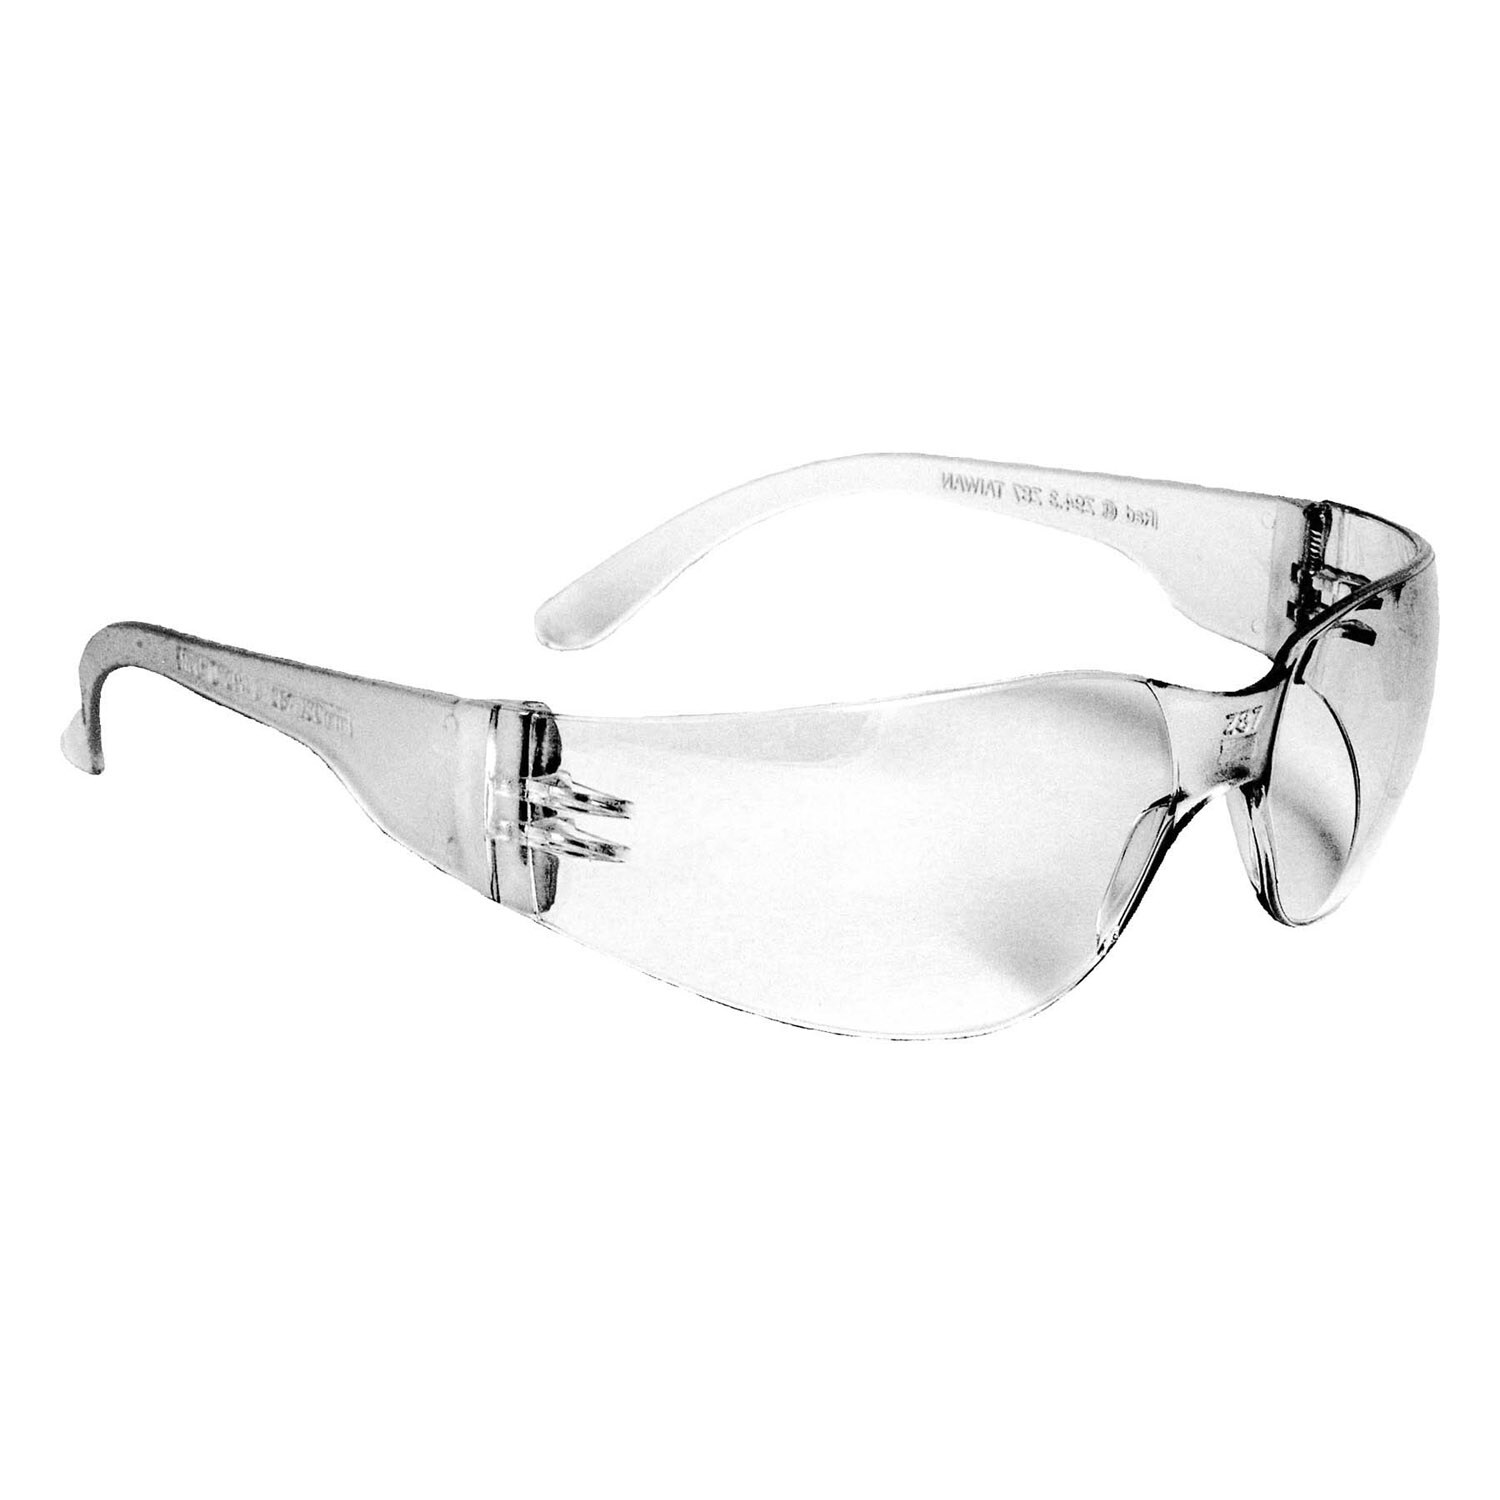 Radians Mirage Safety Glasses with Smoke Lens ANSI Z87 